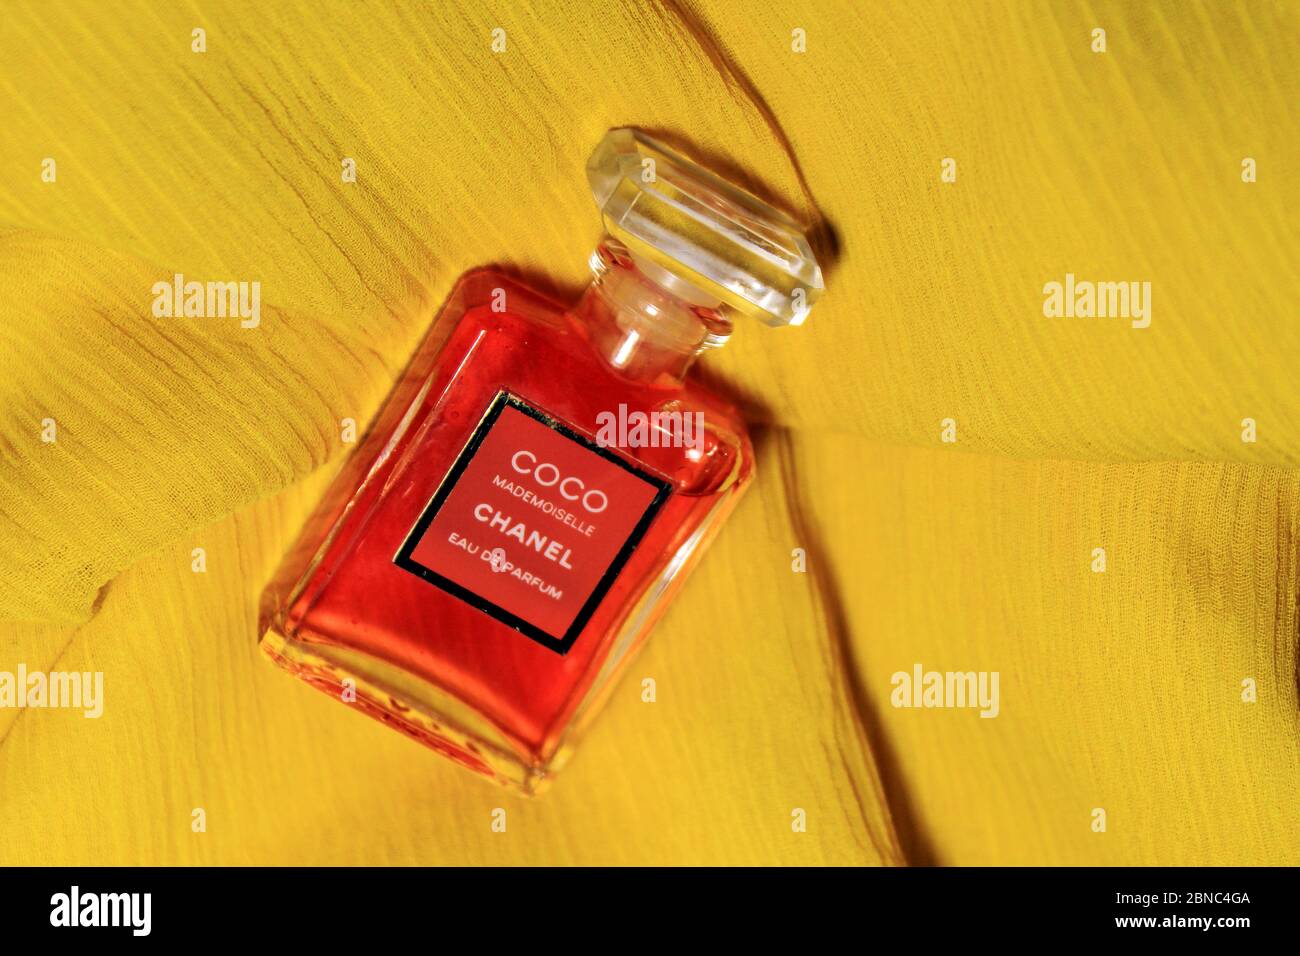 Fondo para perfumes fotografías e imágenes de alta resolución - Alamy